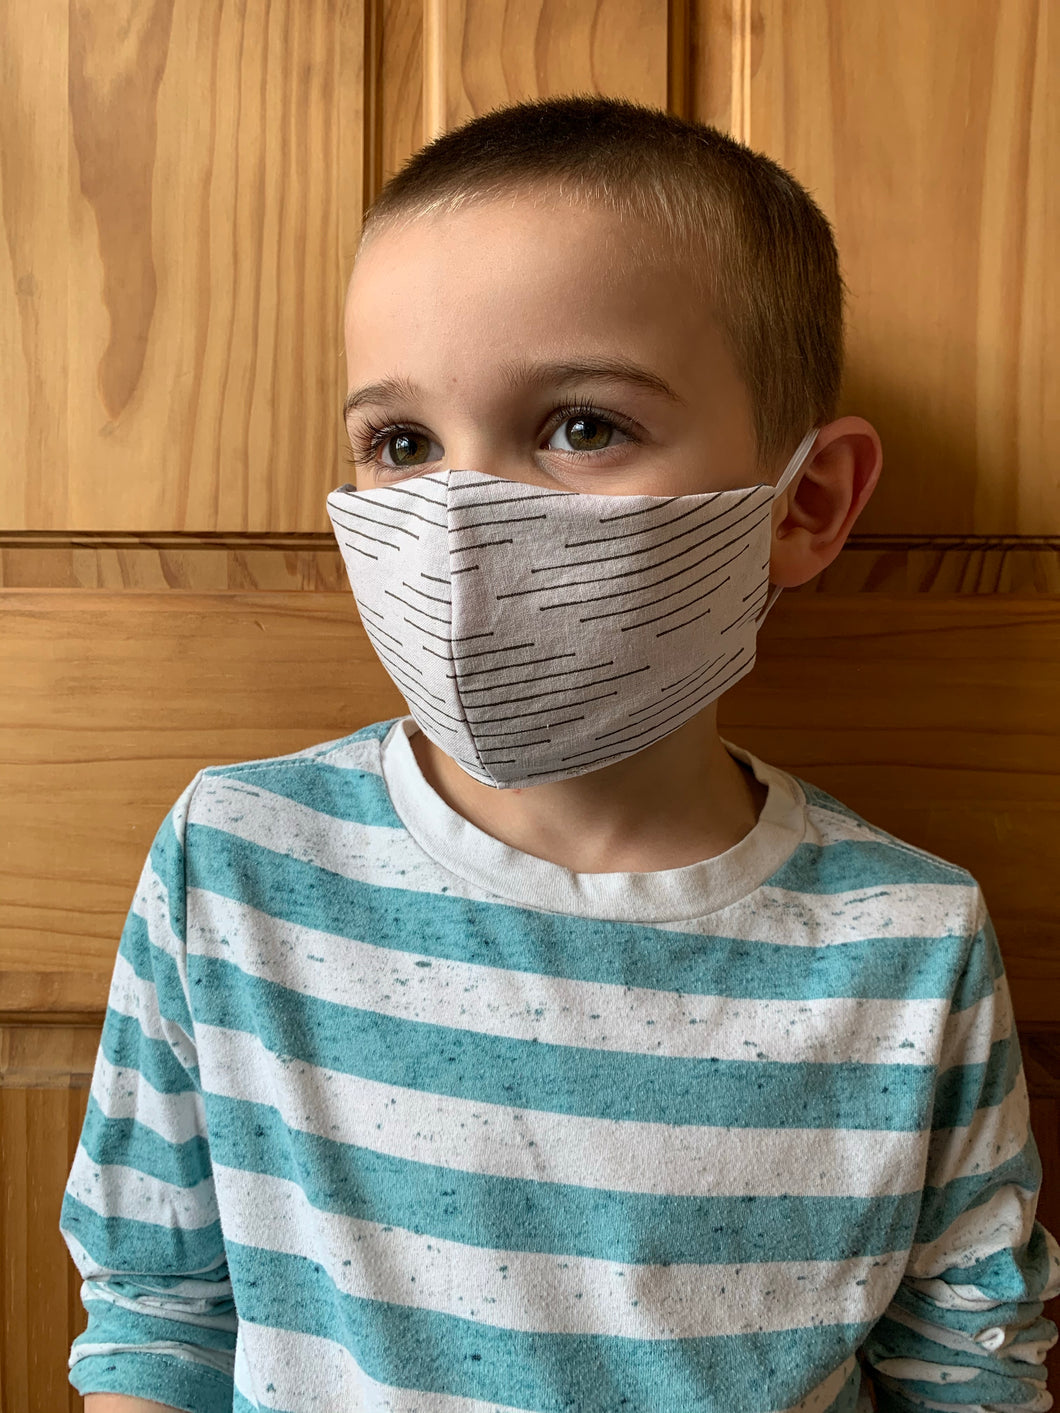 Child Face Mask, Child Face Cover, Child Cotton Face Mask, Child Reusable Face Mask, 3 Layers Cotton Mask, Child Washable Mask